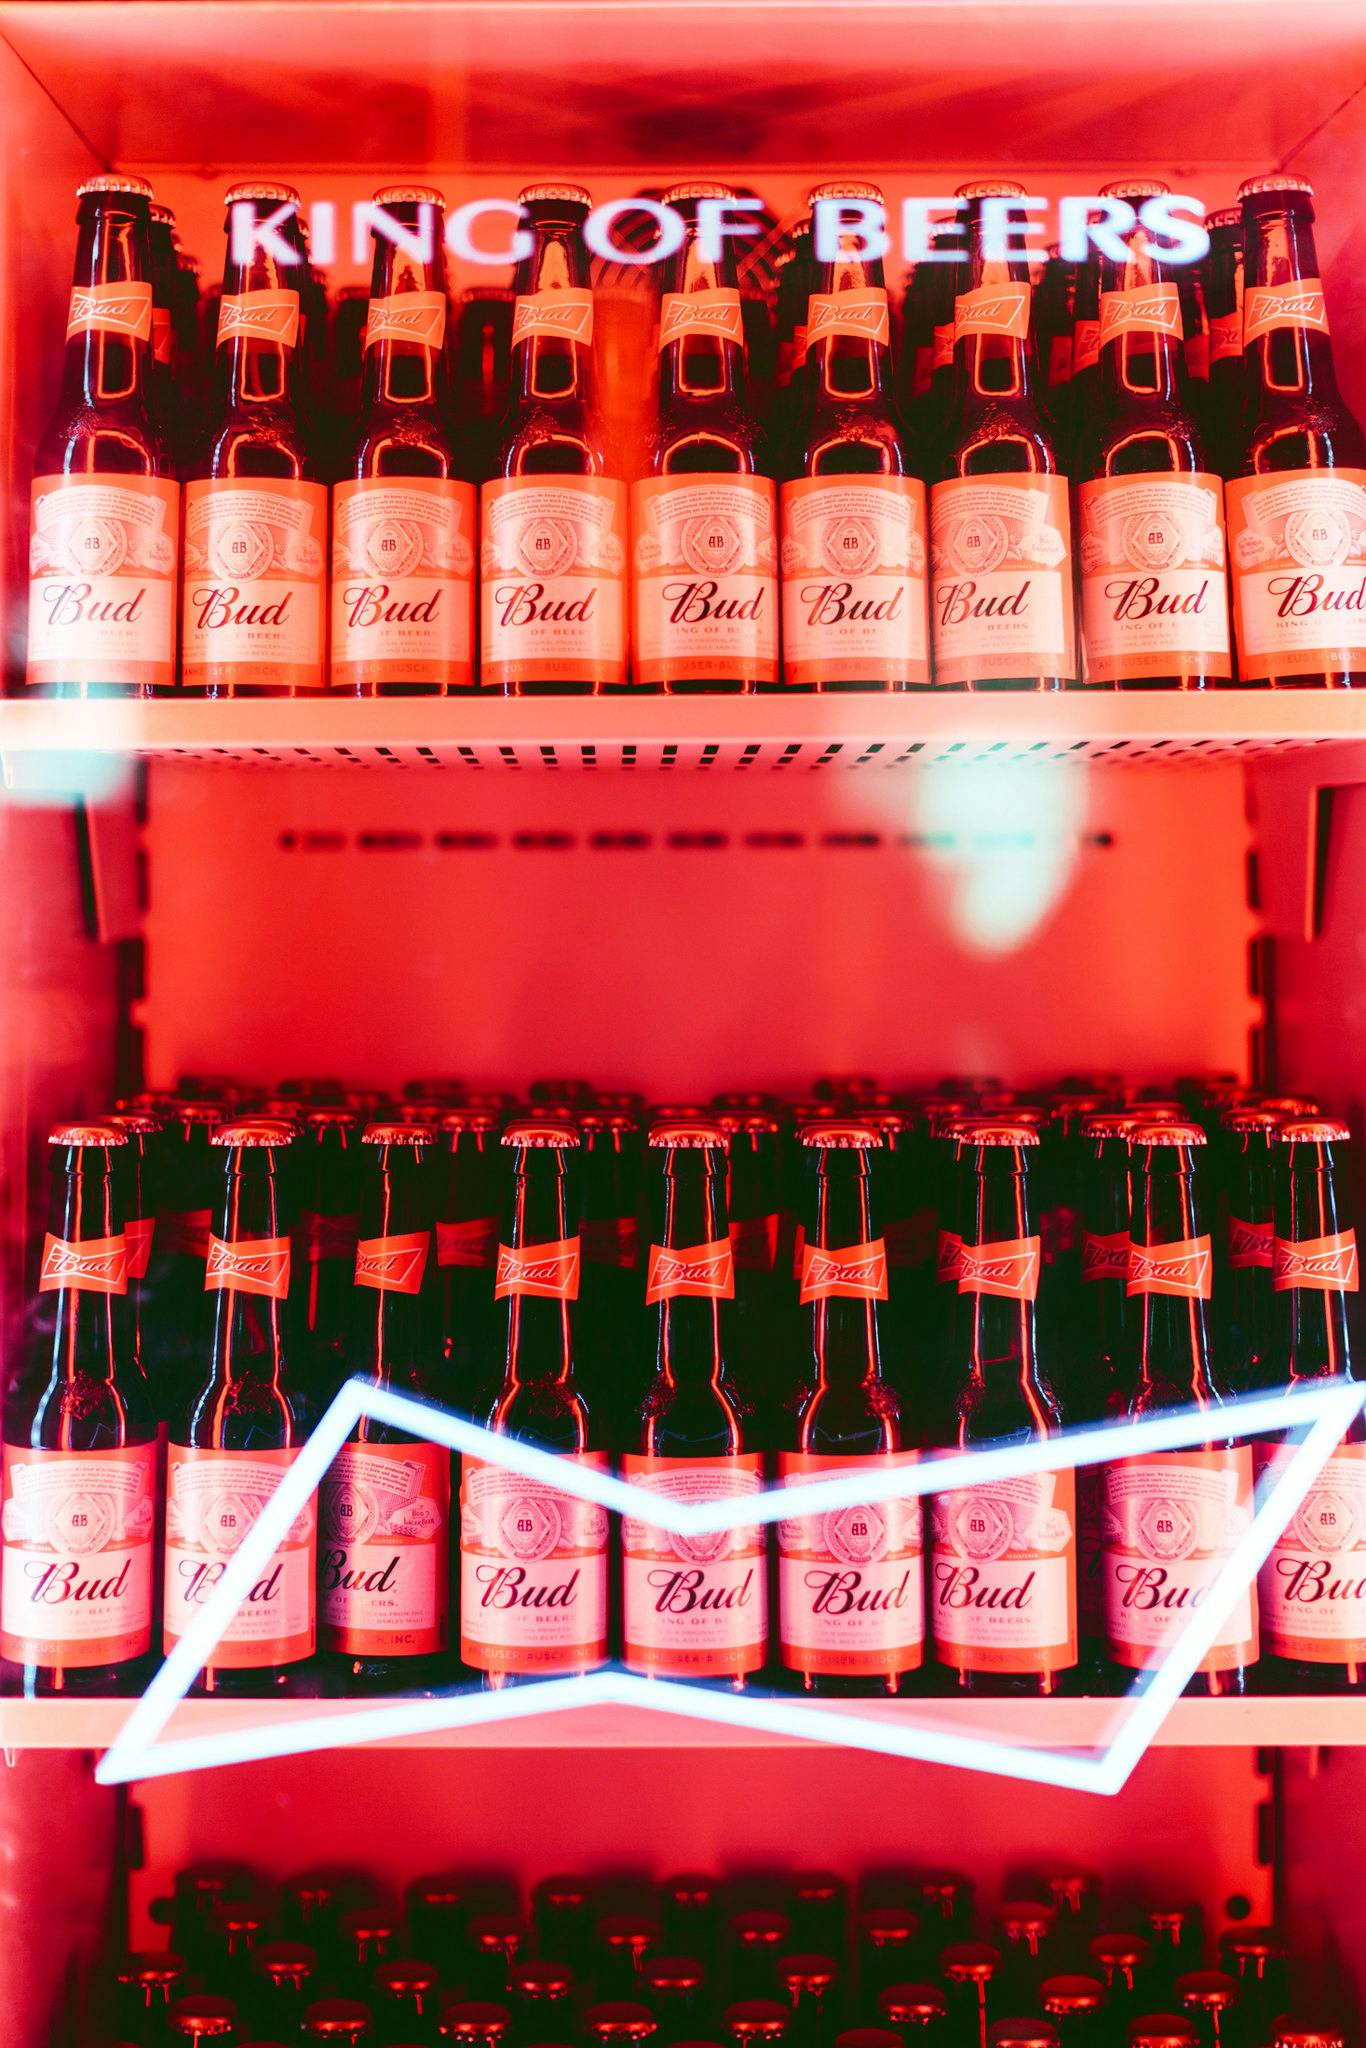 étagère pleine de bouteilles au BudLab de Budweiser